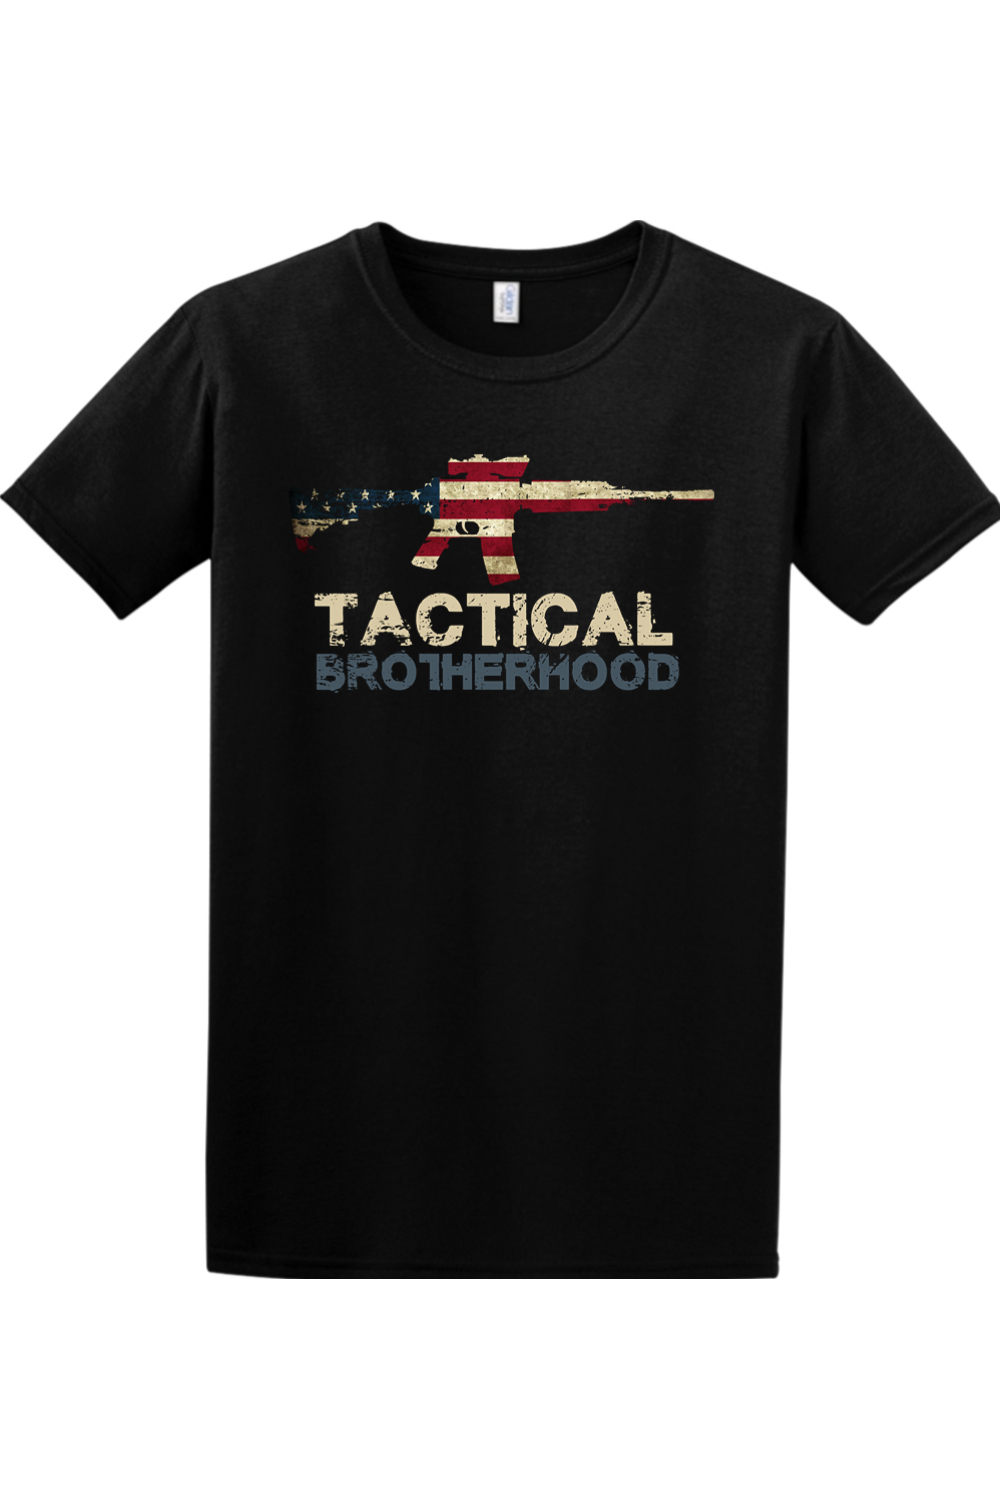 OG 4 - Tactical Brotherhood Official T-Shirt